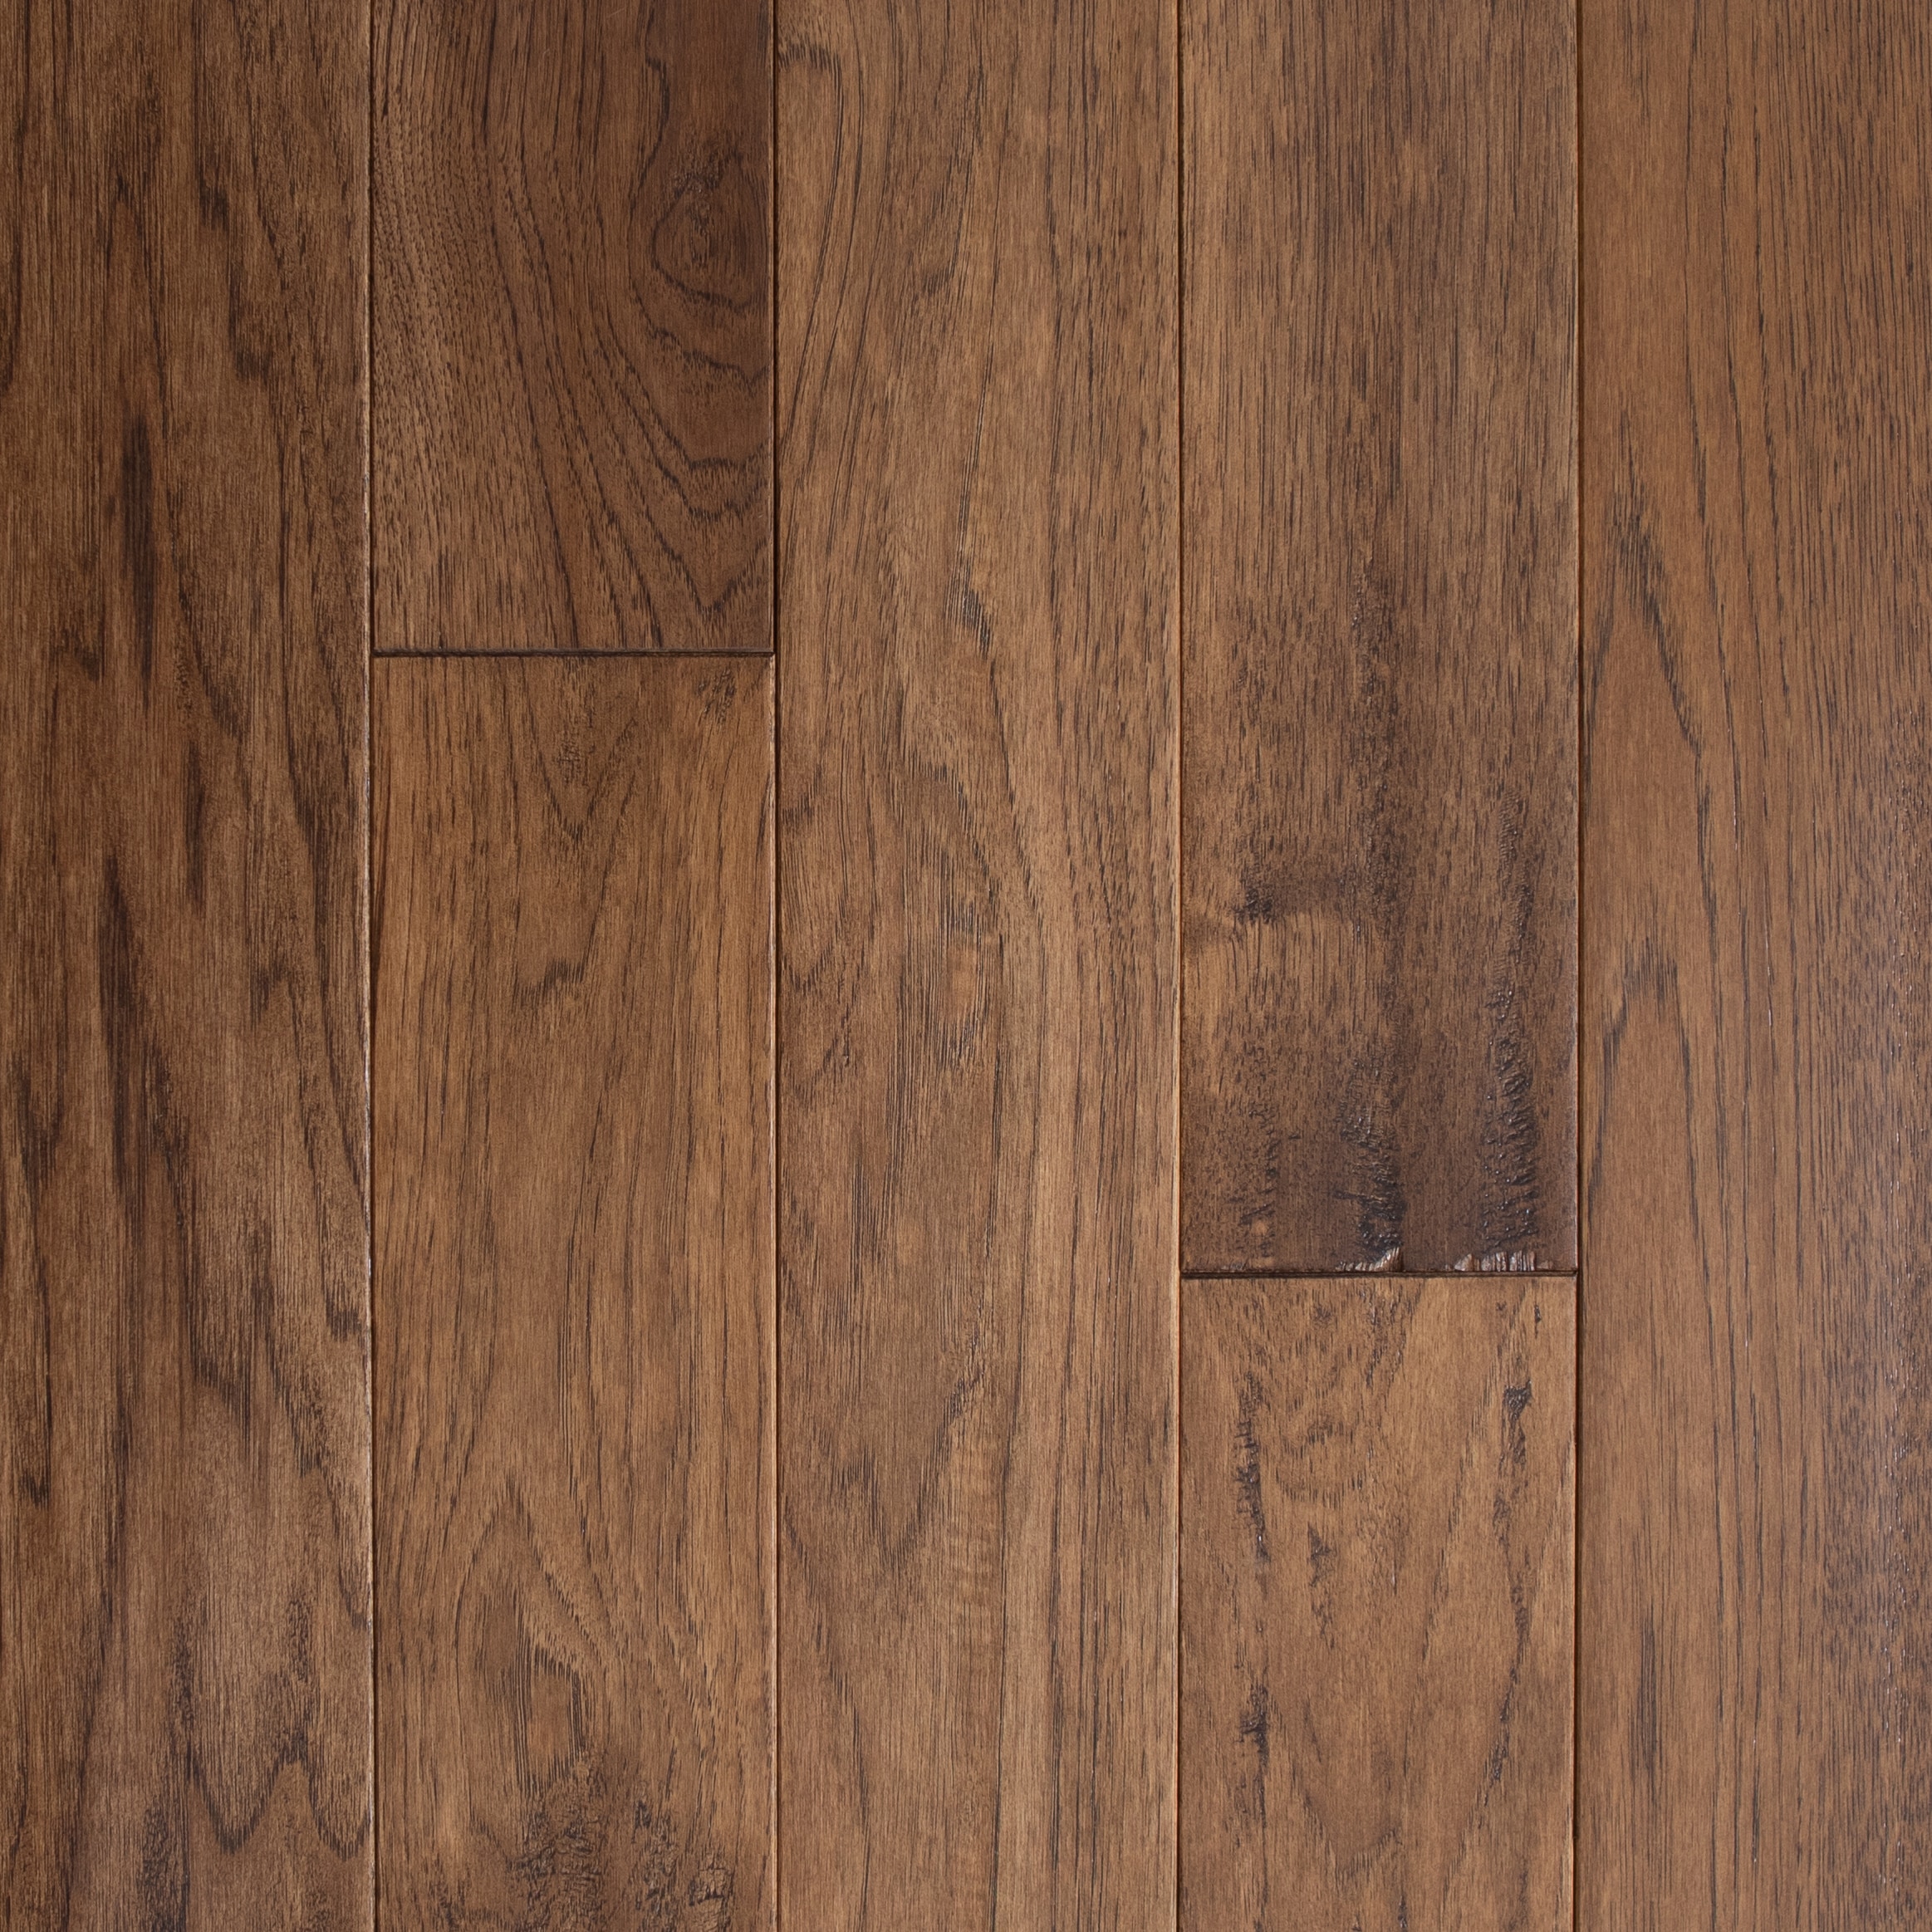 Solid Hardwood Flooring, 4 Hickory Hardwood Flooring